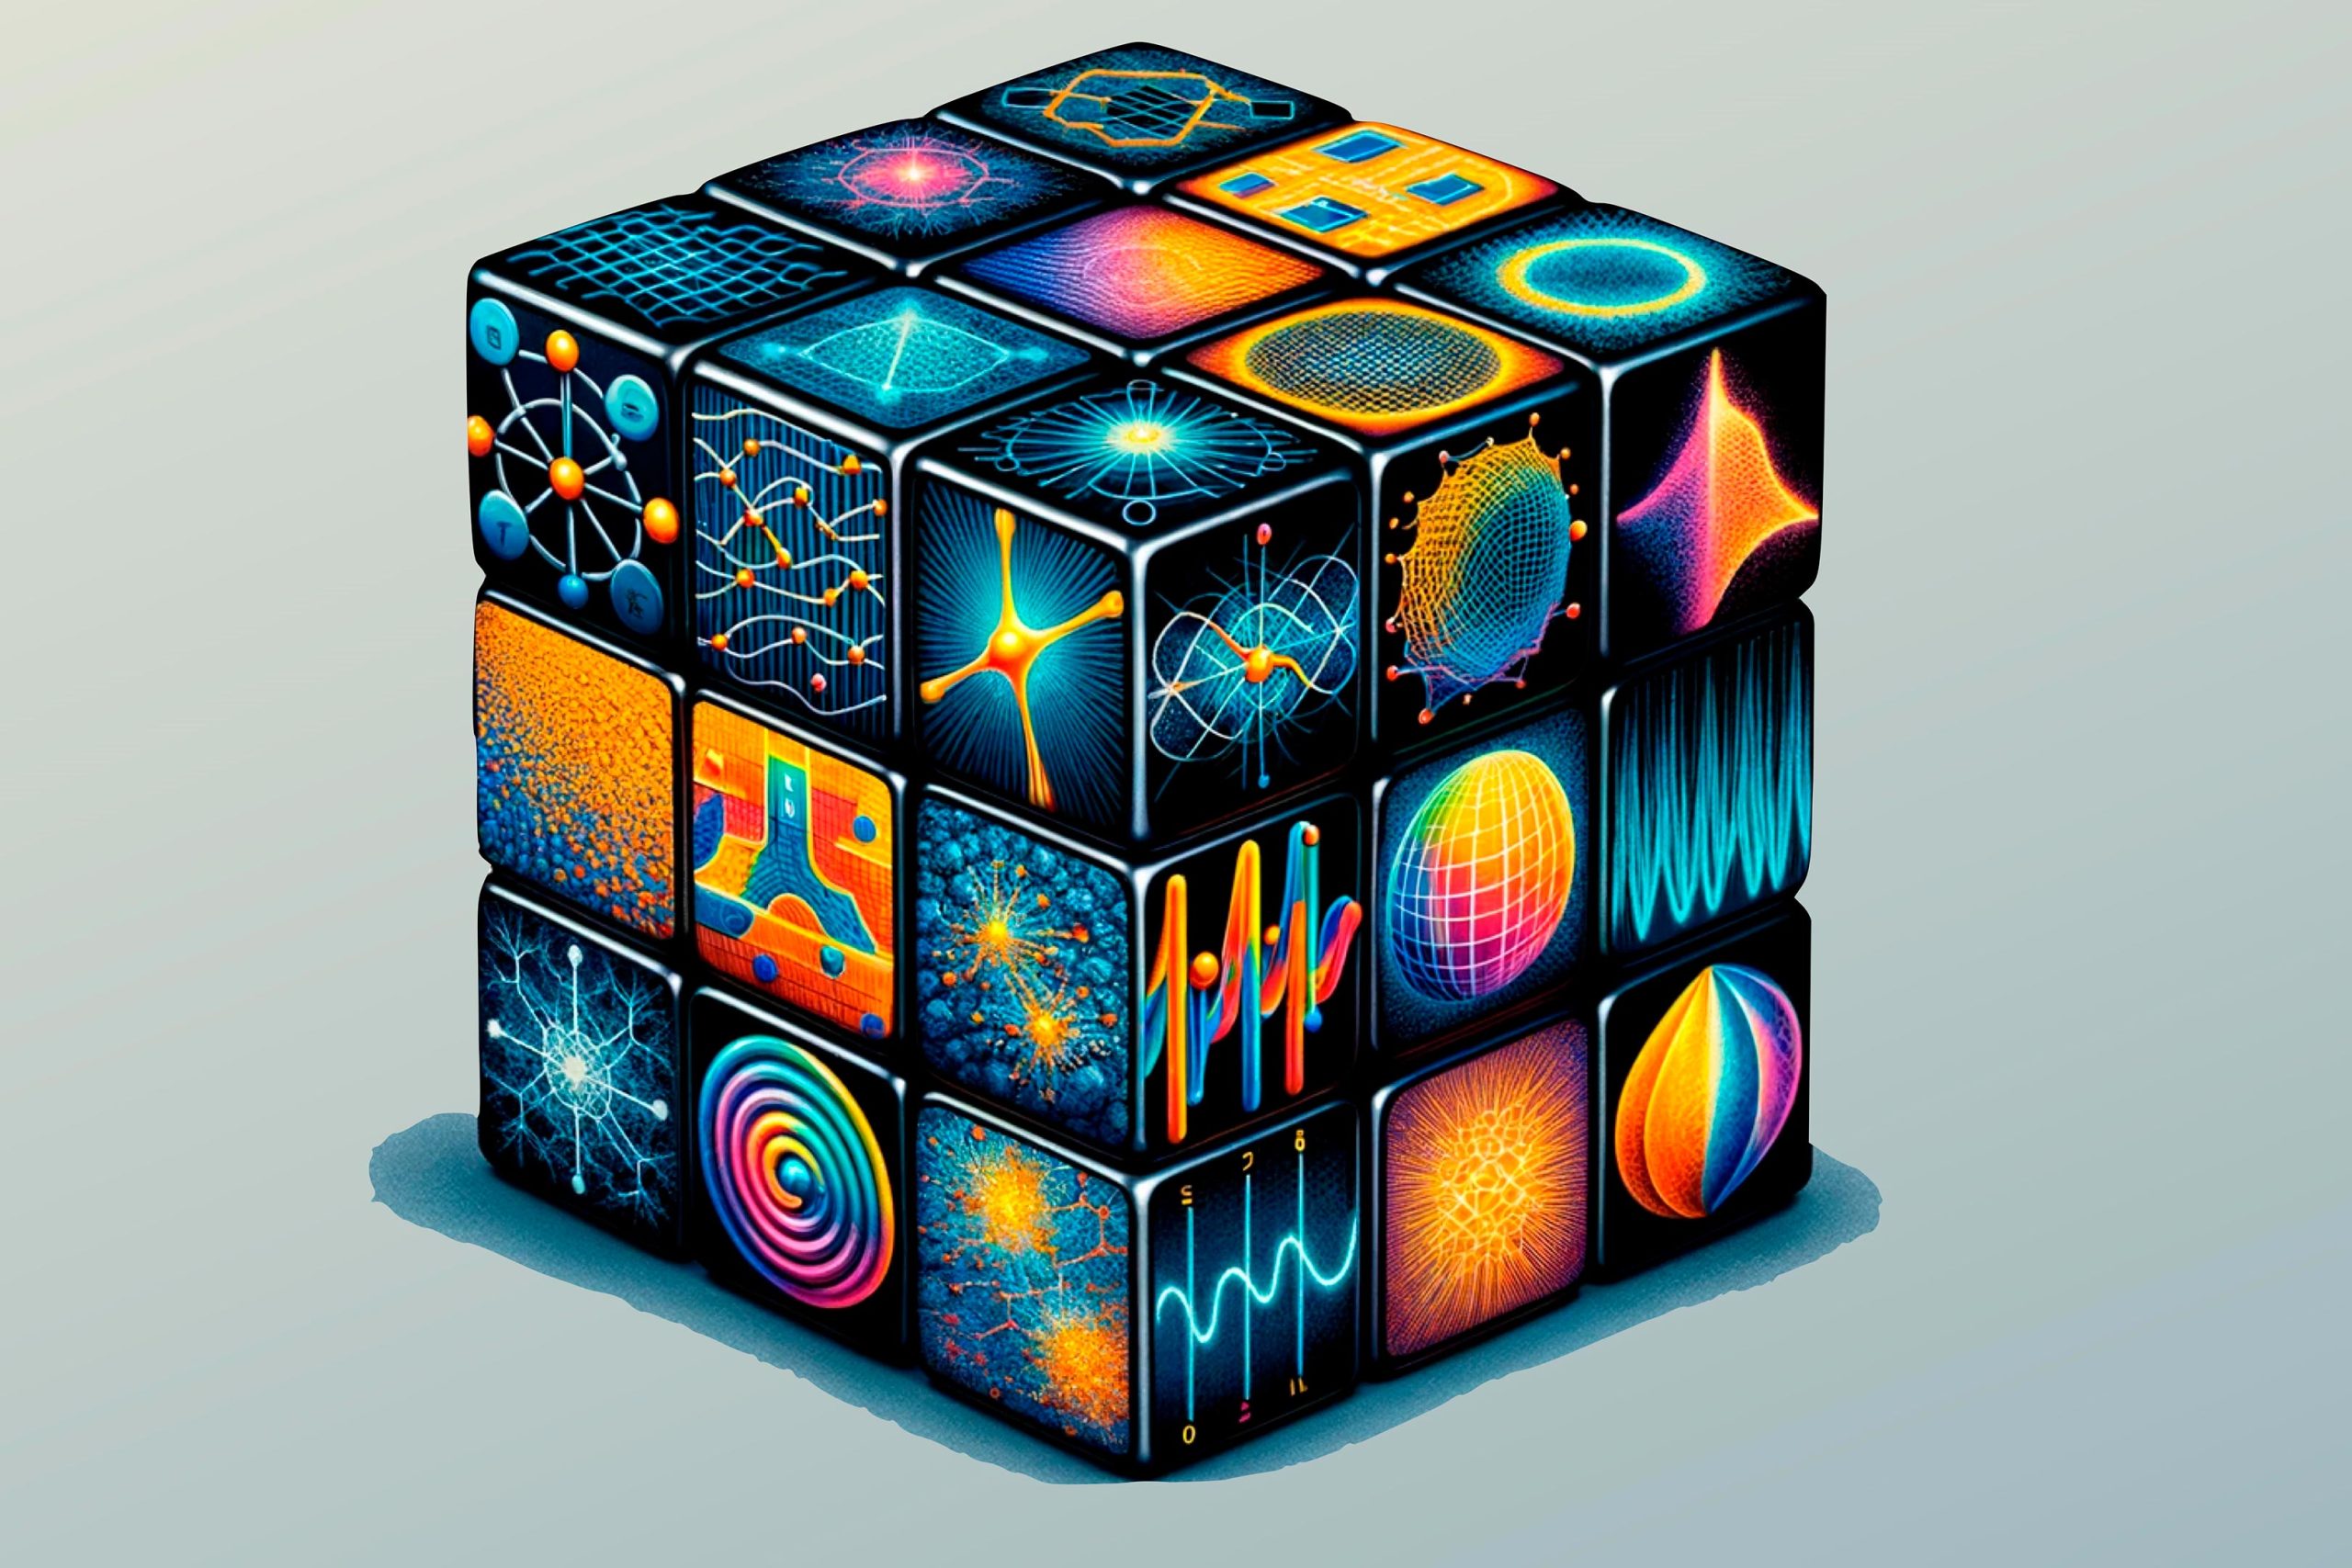 Evolution Of The Rubik's Cube - Read Rubik's Cube History